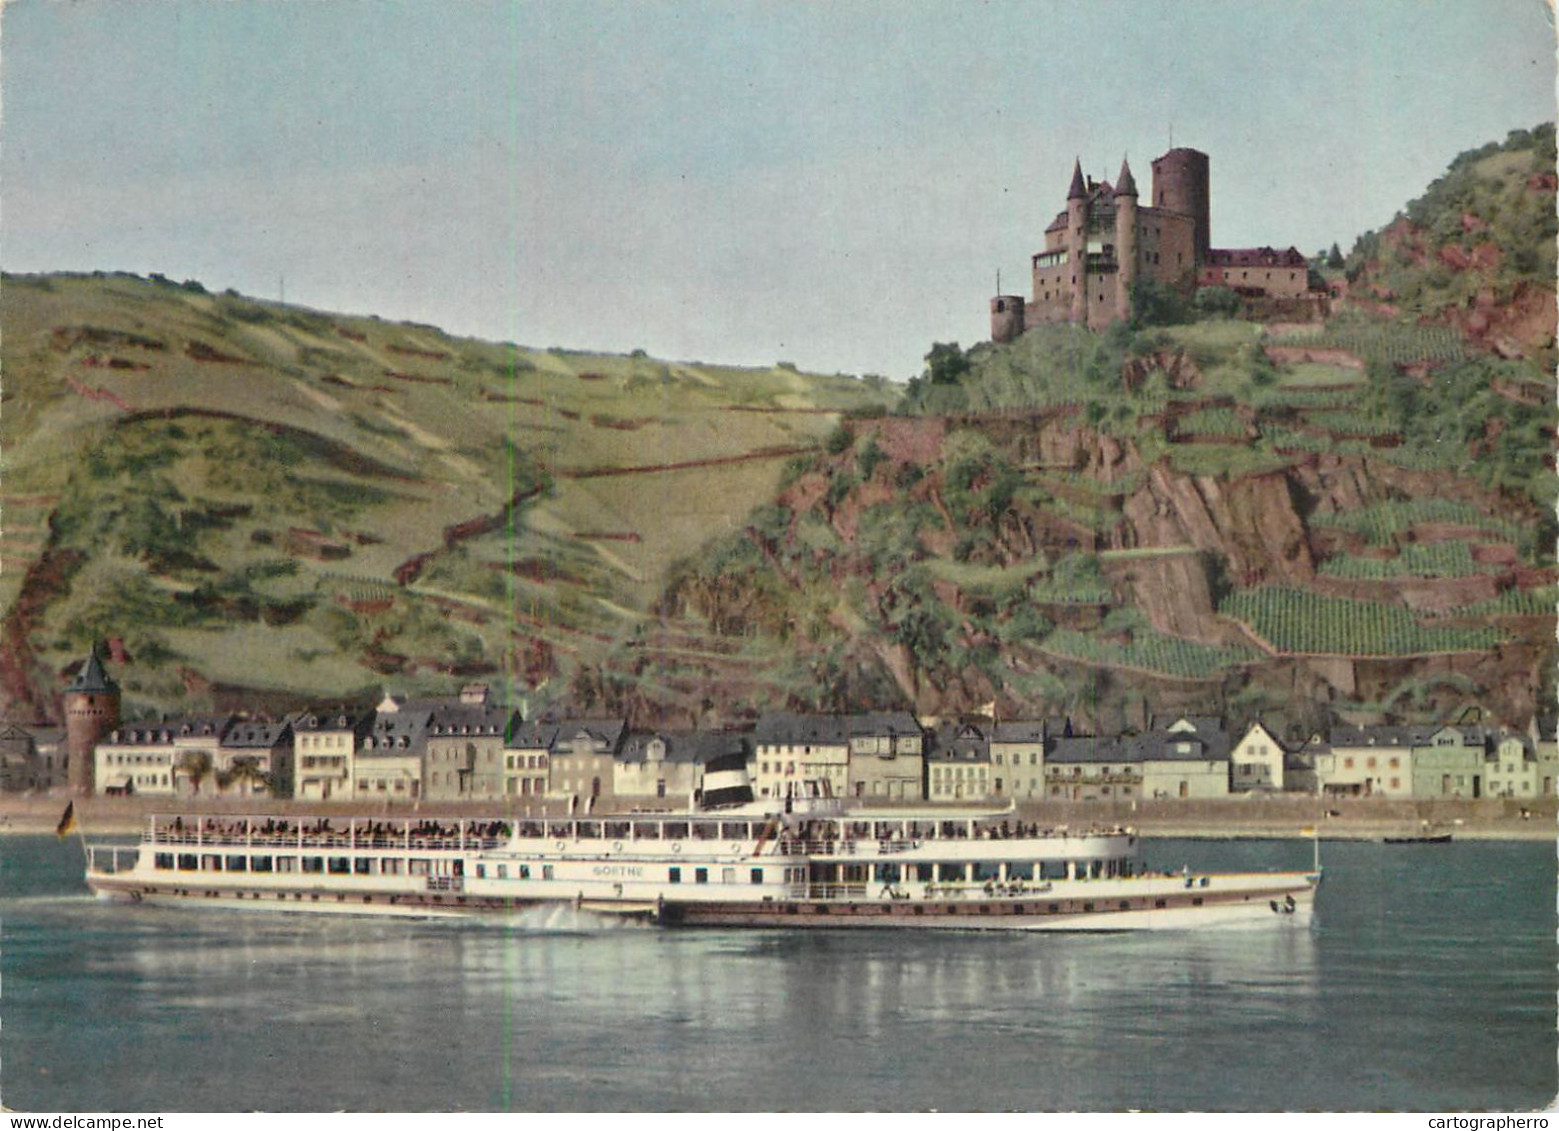 Navigation Sailing Vessels & Boats Themed Postcard Burg Katz Am Rhein Pleasure Cruise - Segelboote